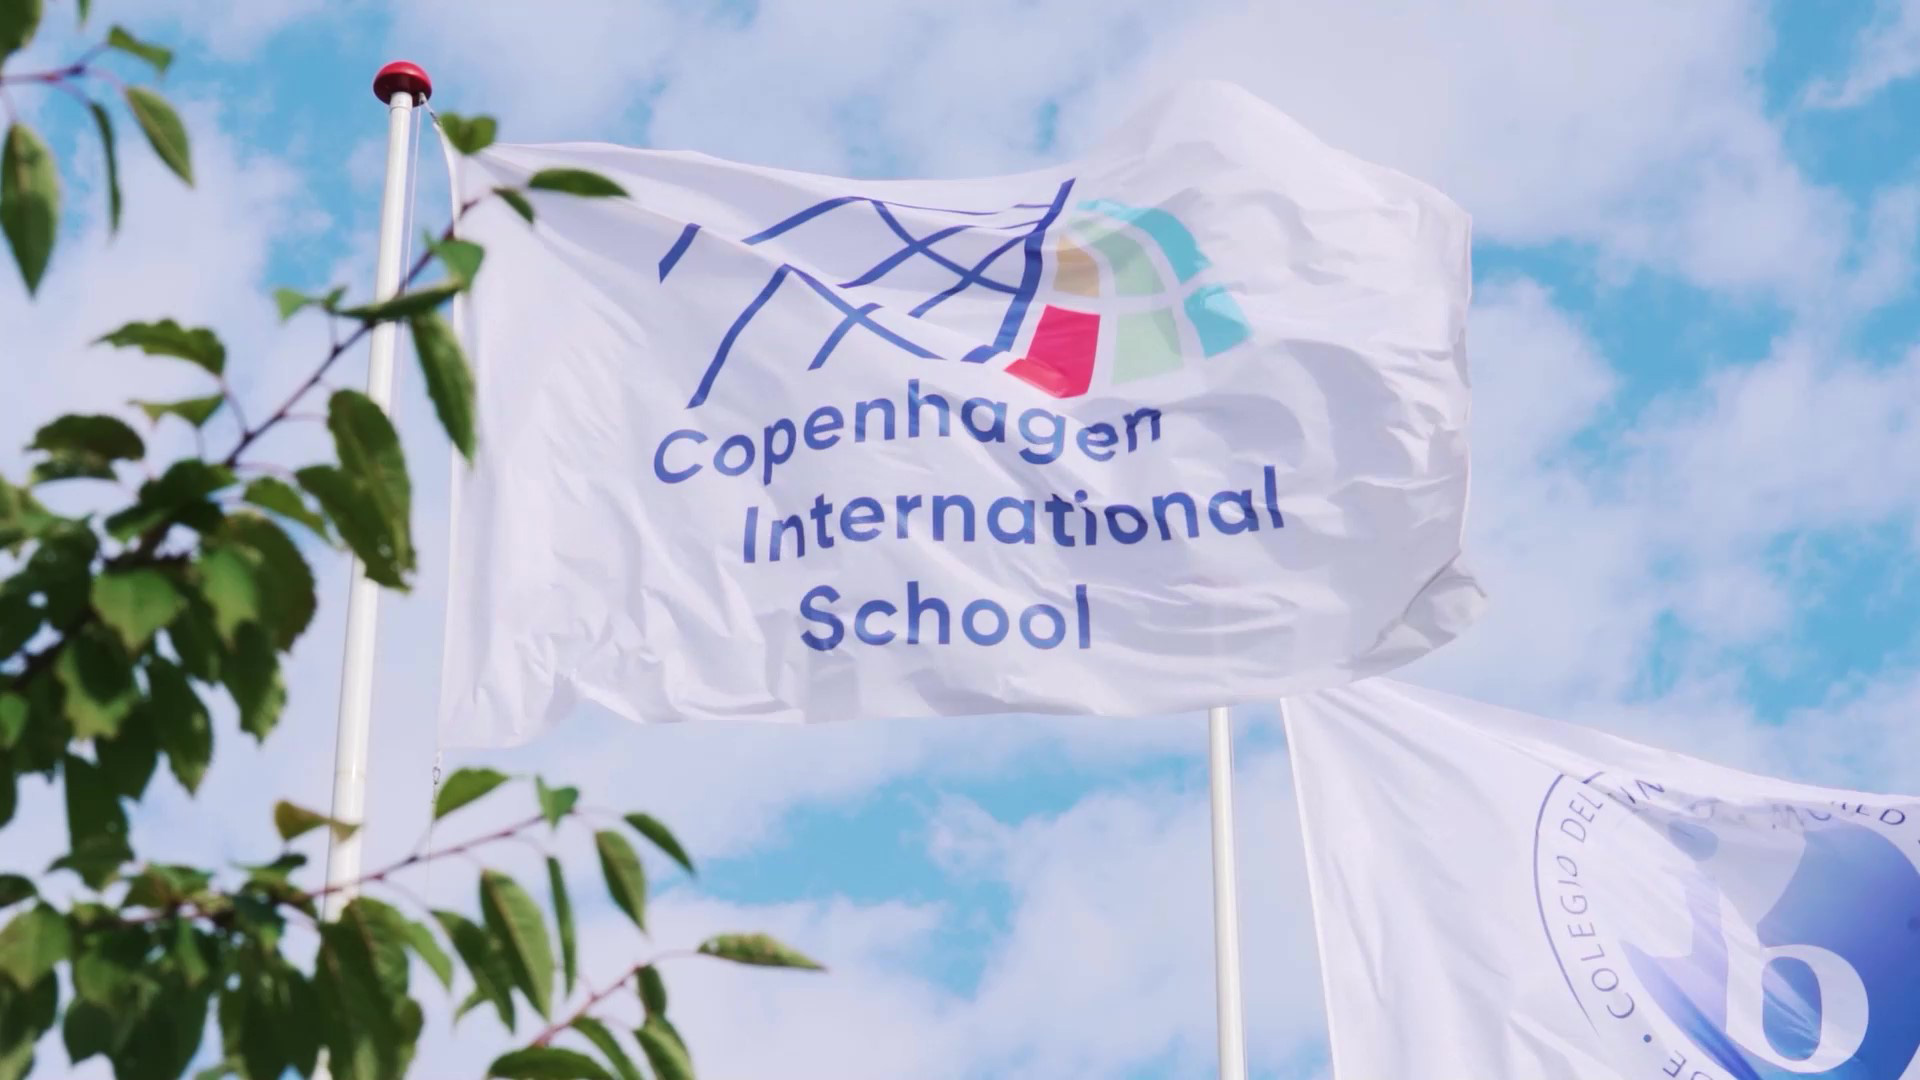 Copenhagen Internation School Flagstang